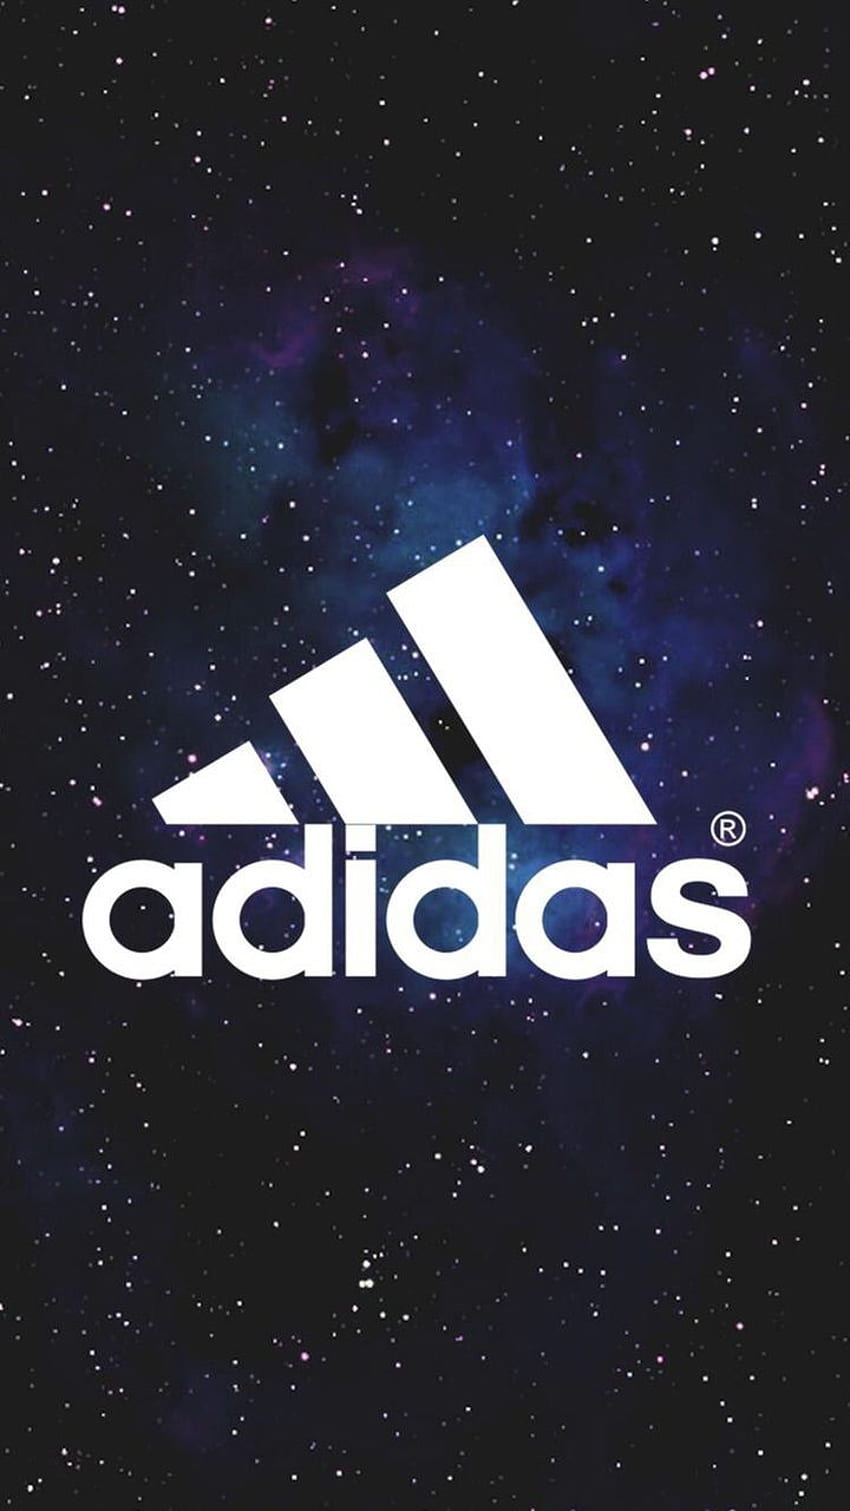 Adidas Logo Wallpapers - Top 25 Best Adidas Logo Wallpapers Download